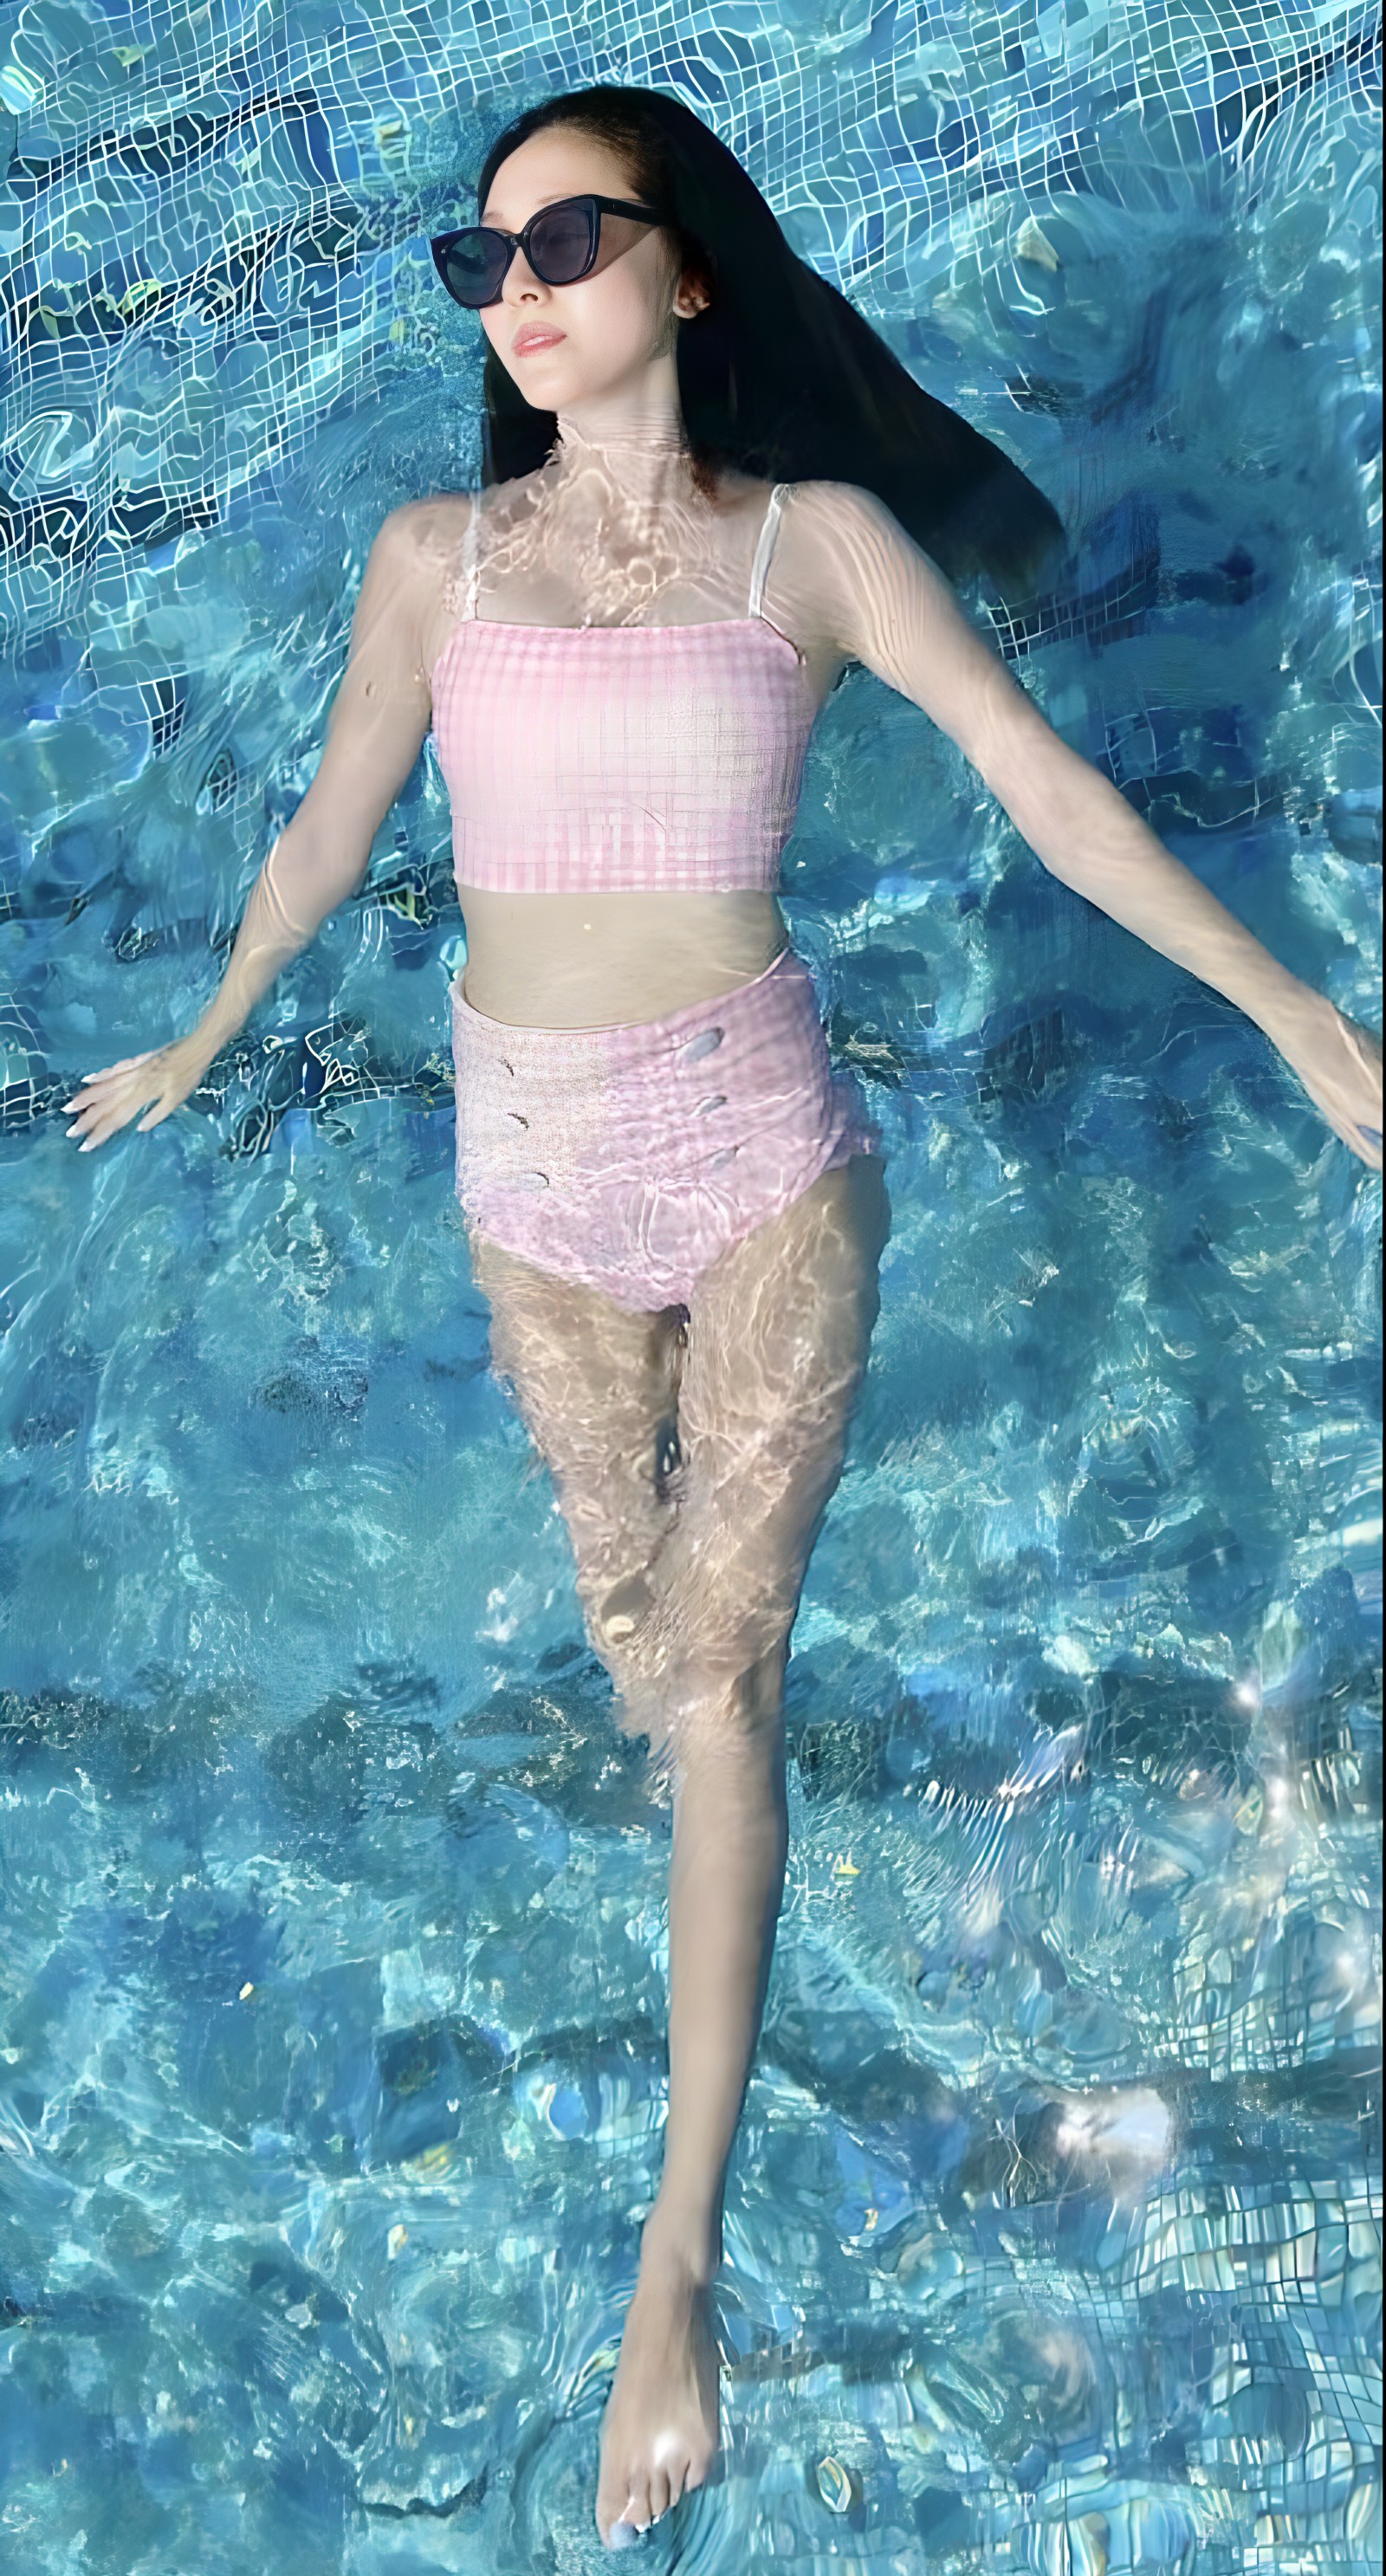 Jessica's swimsuit